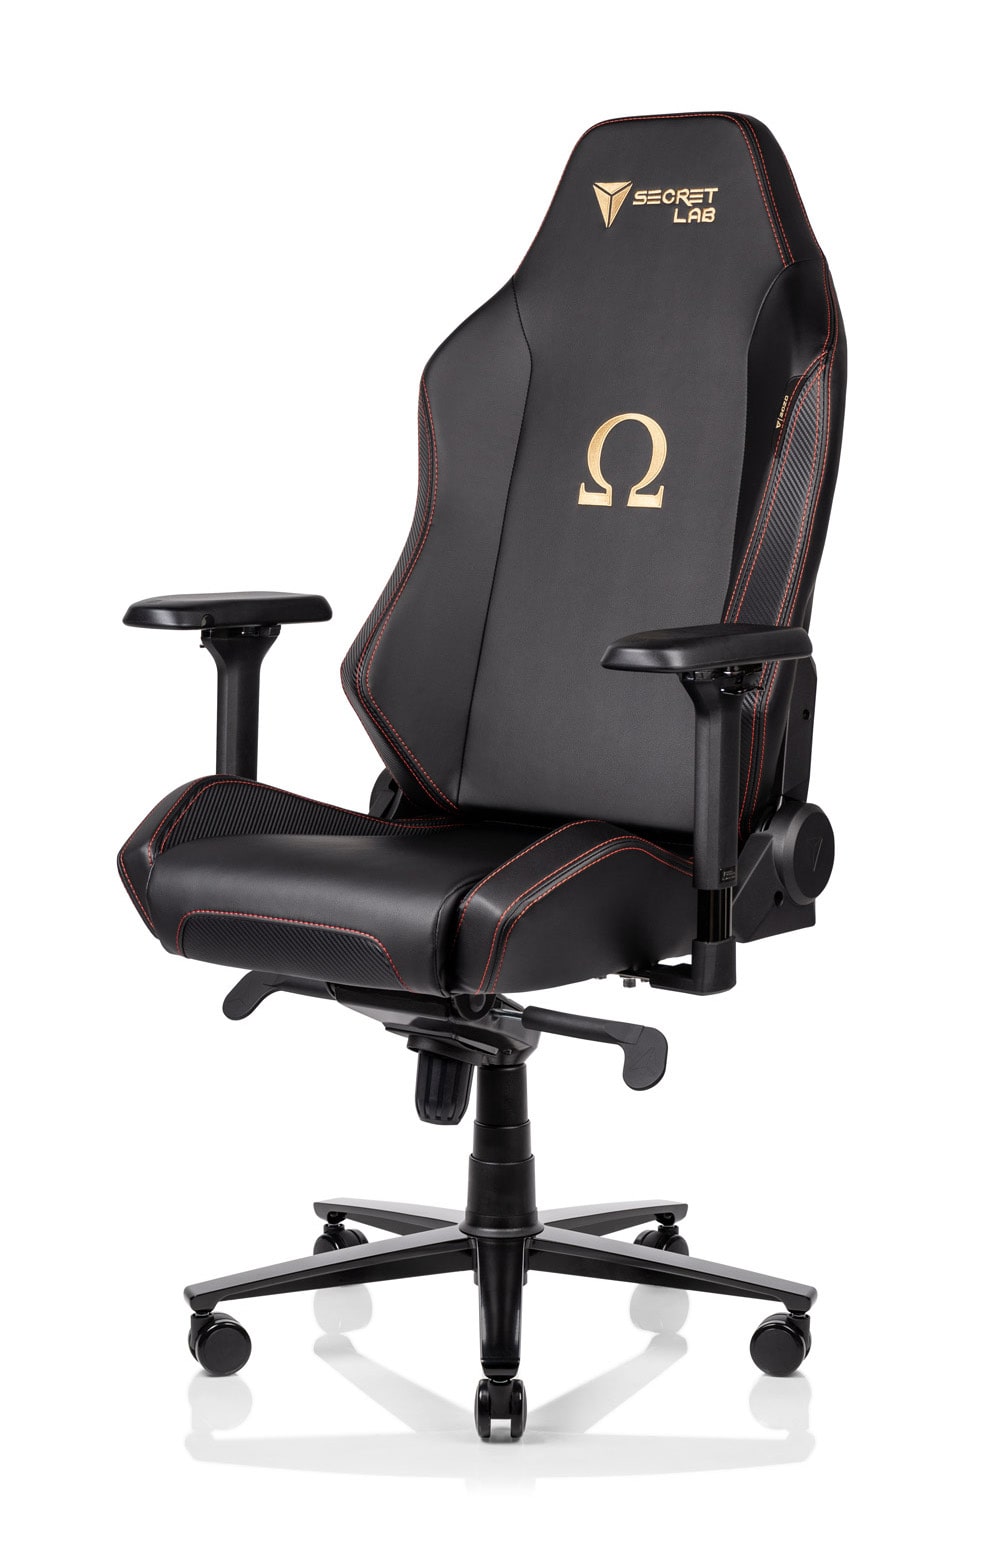 omega 2020 chair